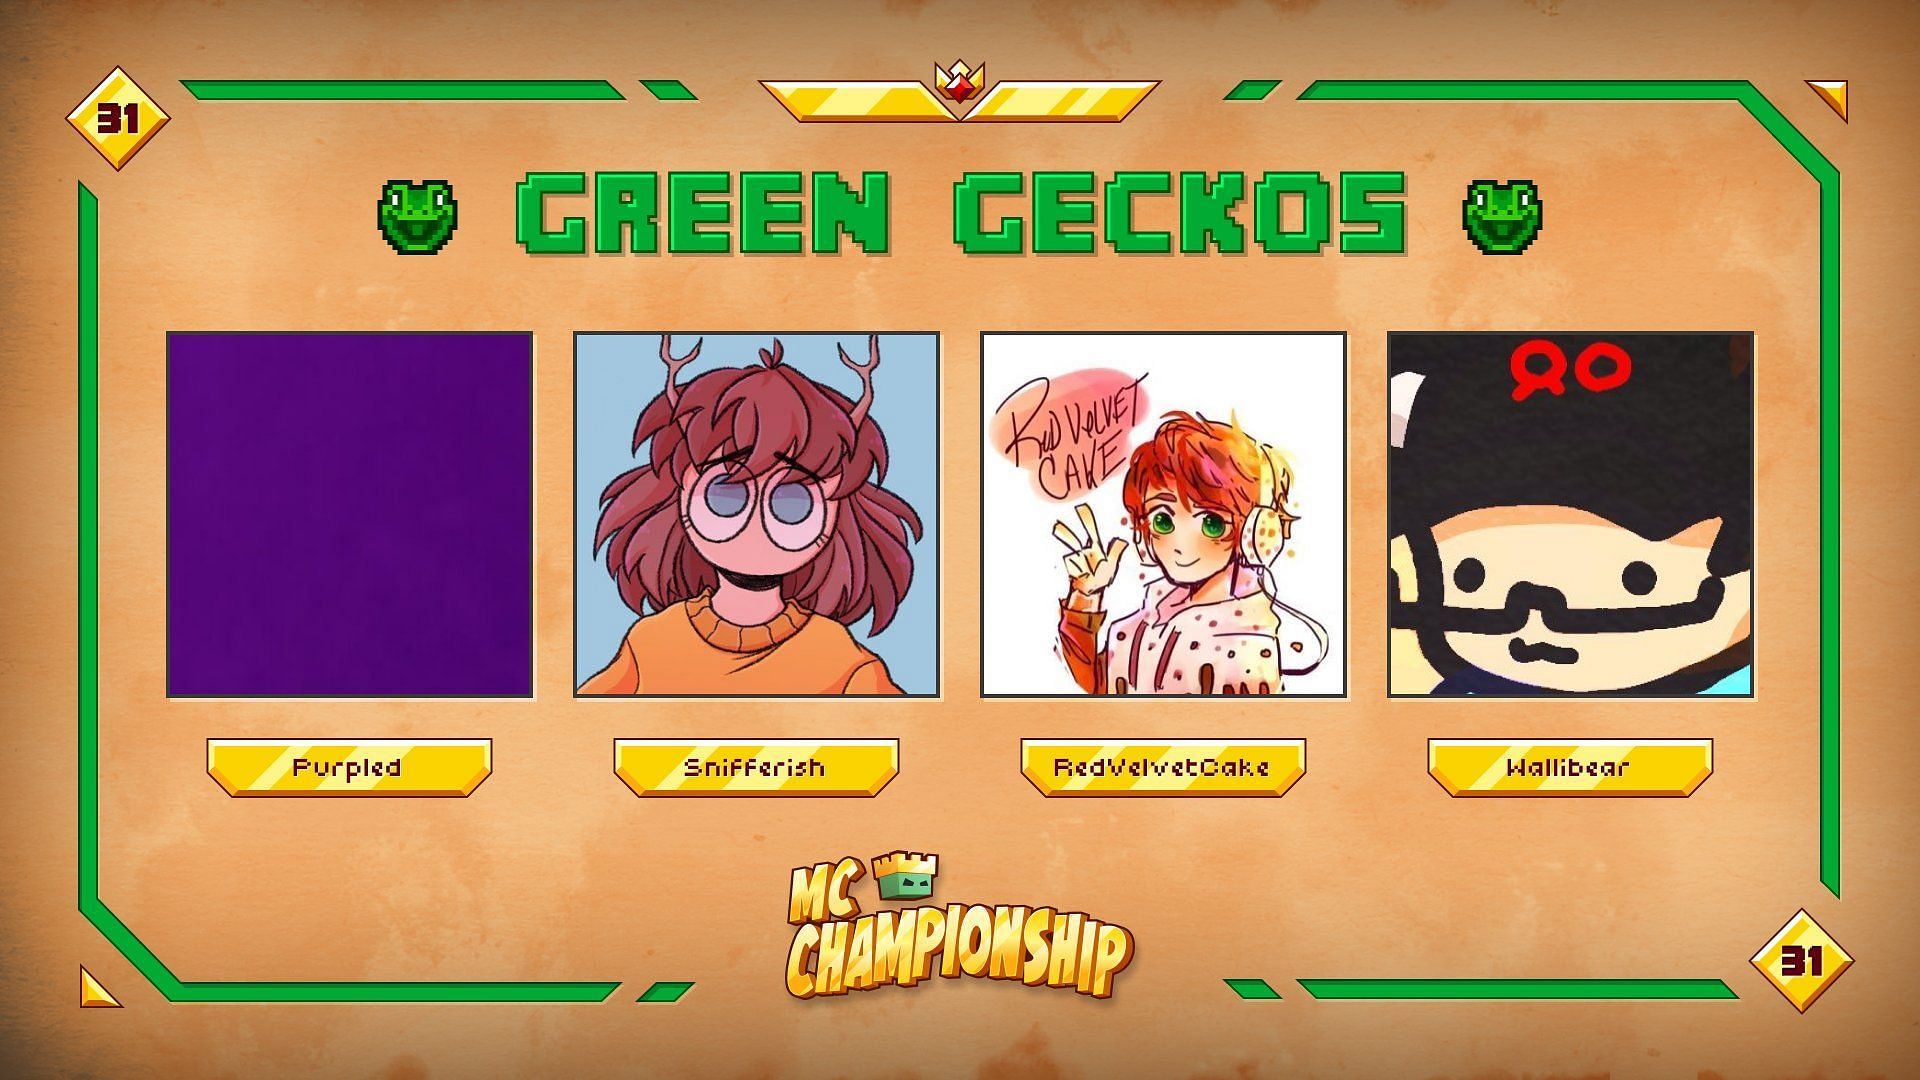 The Green Geckos for MCC 31 (Image via Nox Crew)